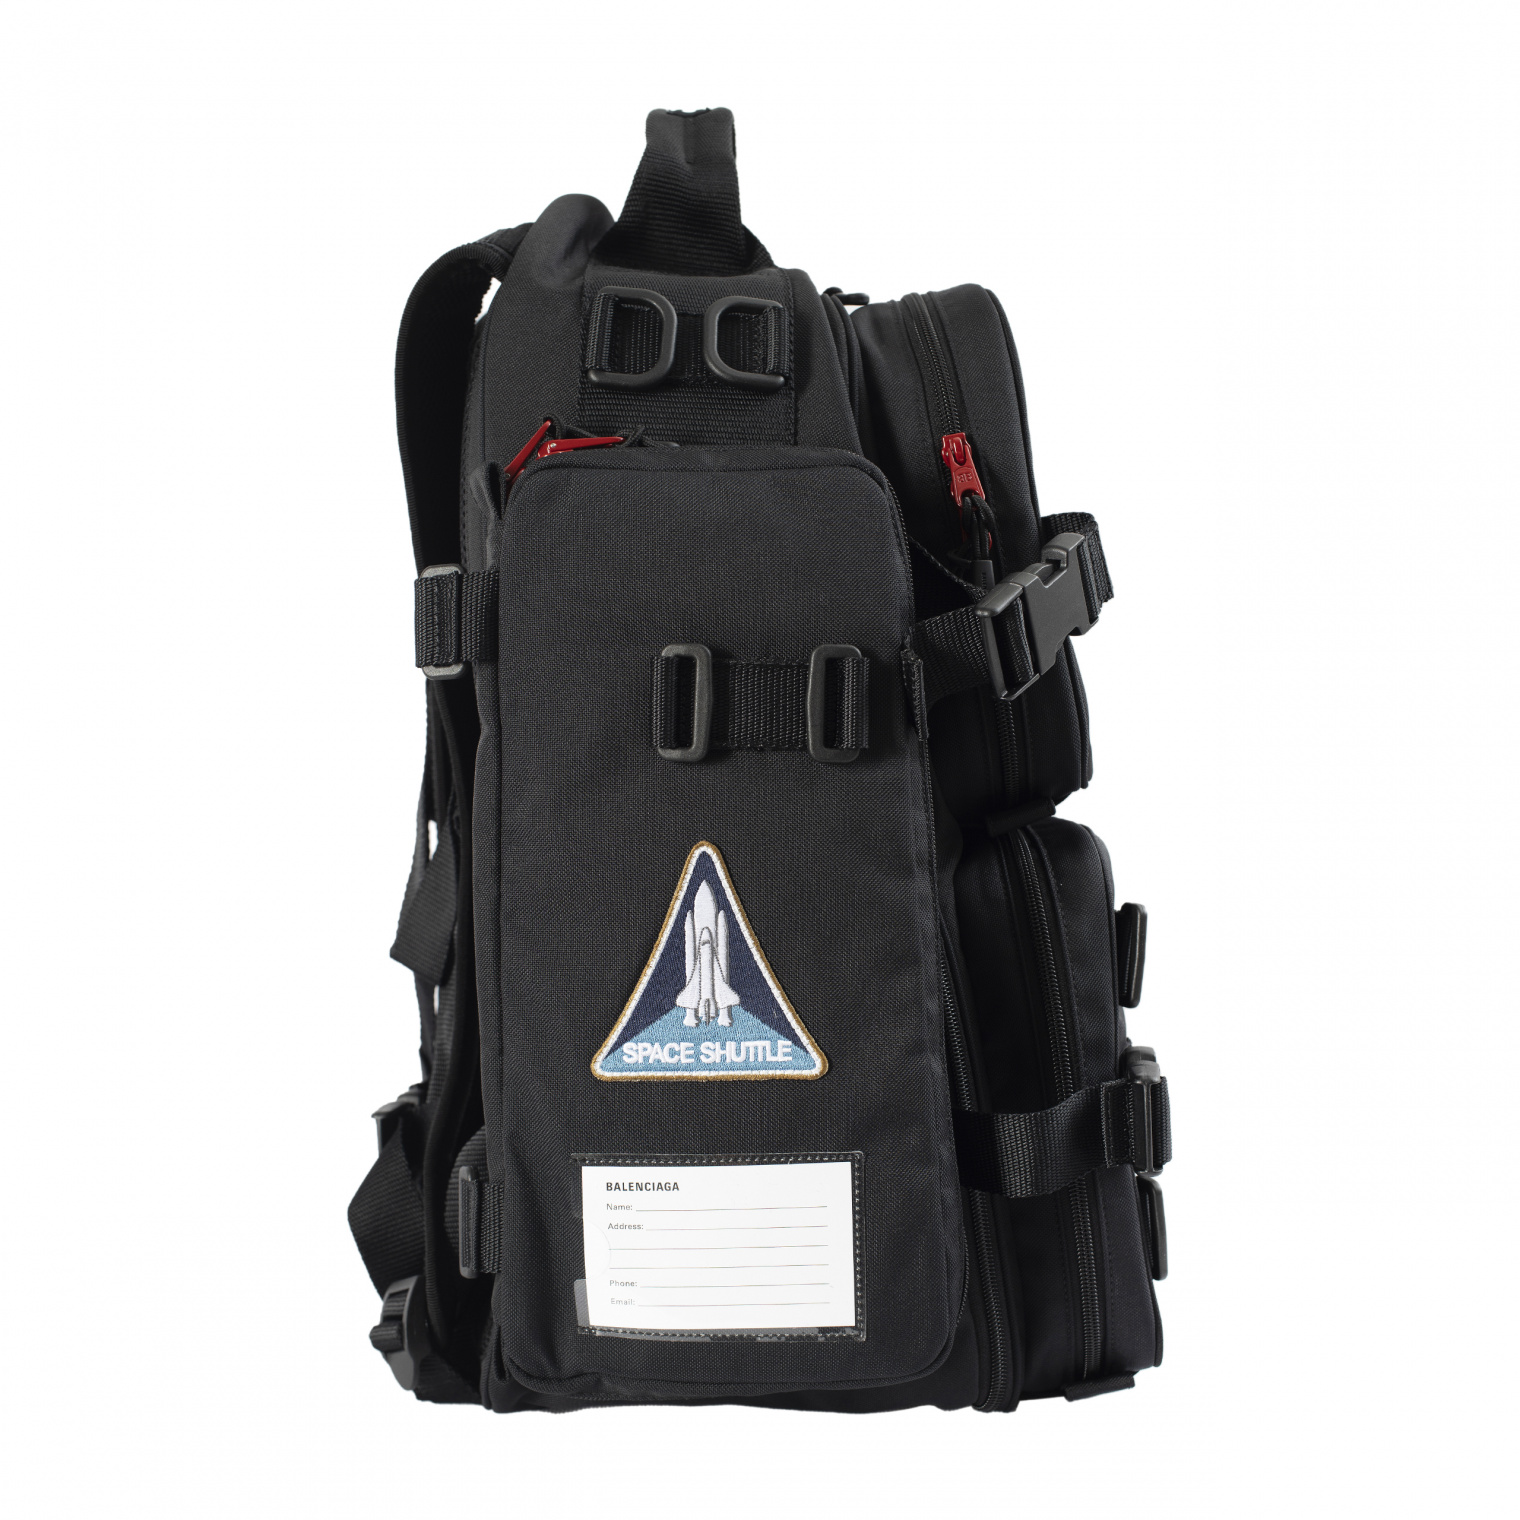 Balenciaga Black Space Backpack in embroidered NASA